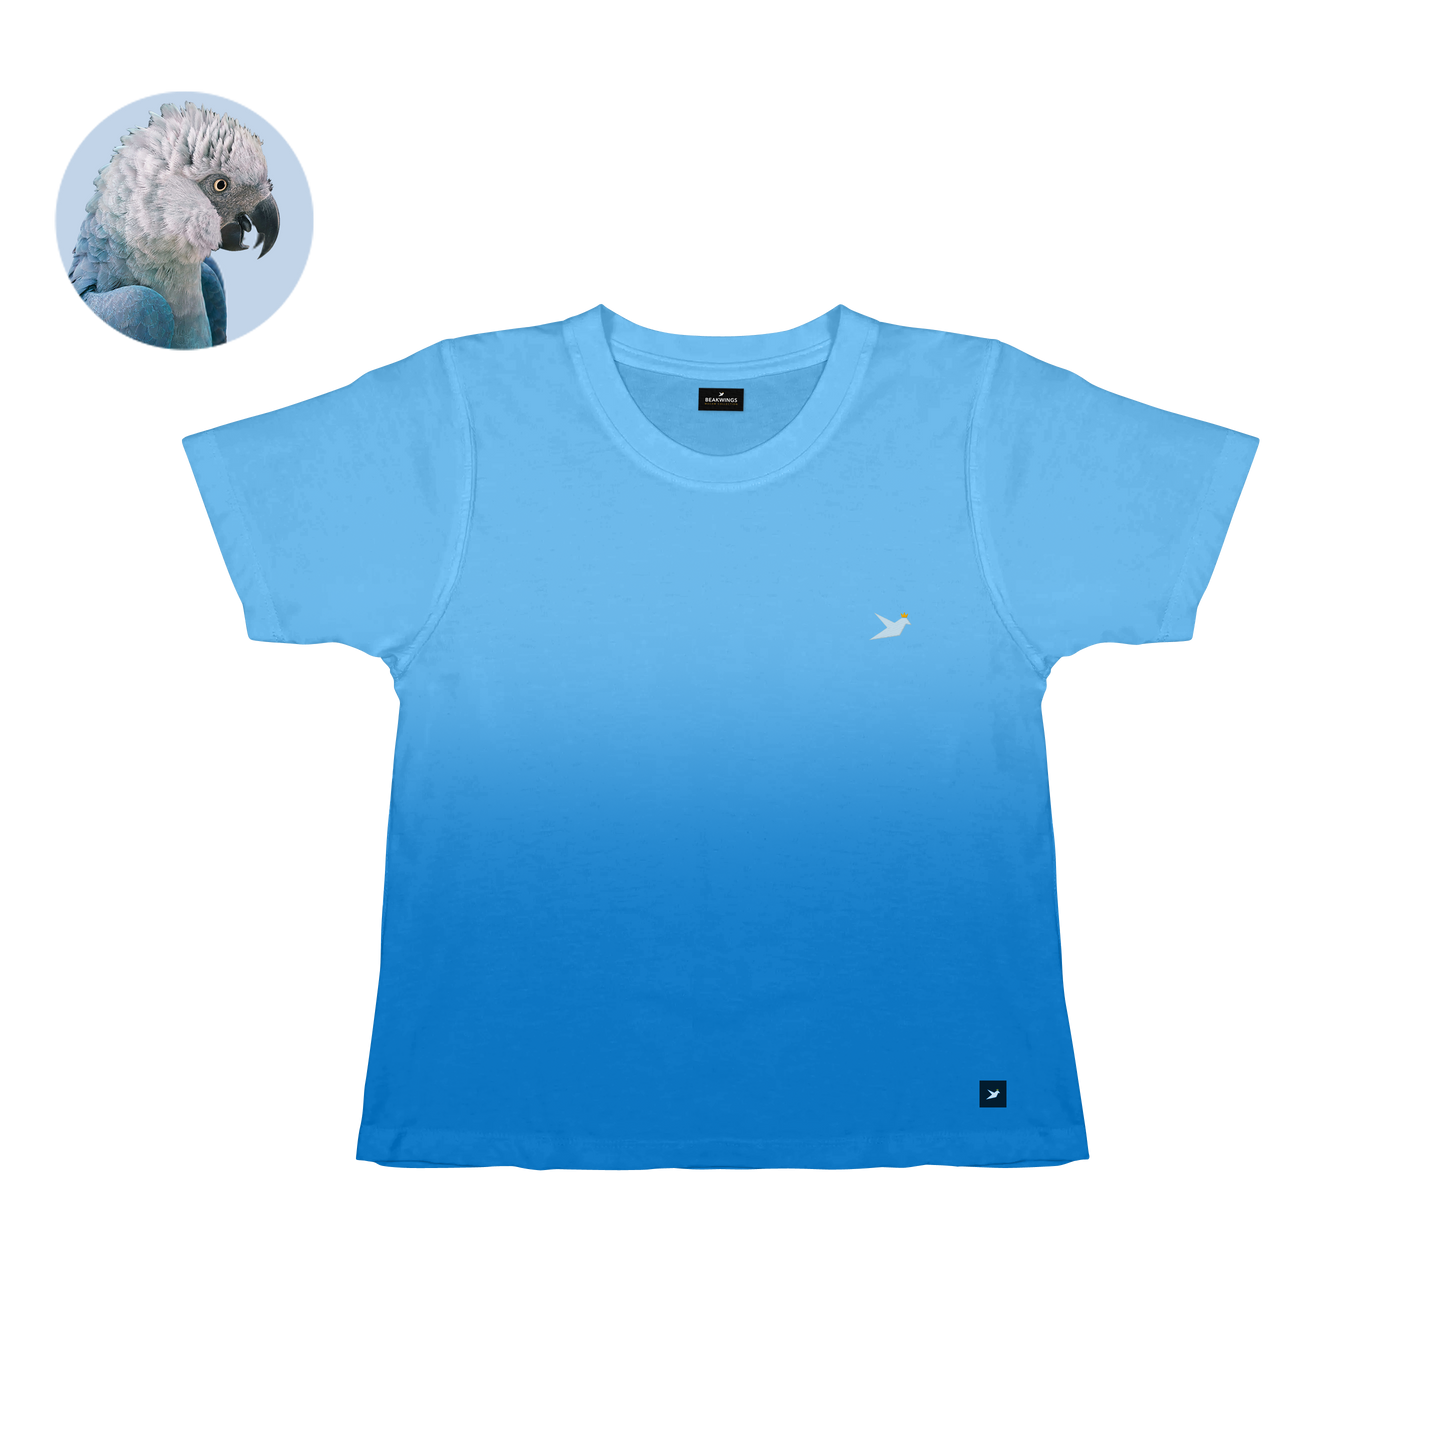 Spix Macaw - Organic Kids Unisex T-Shirt